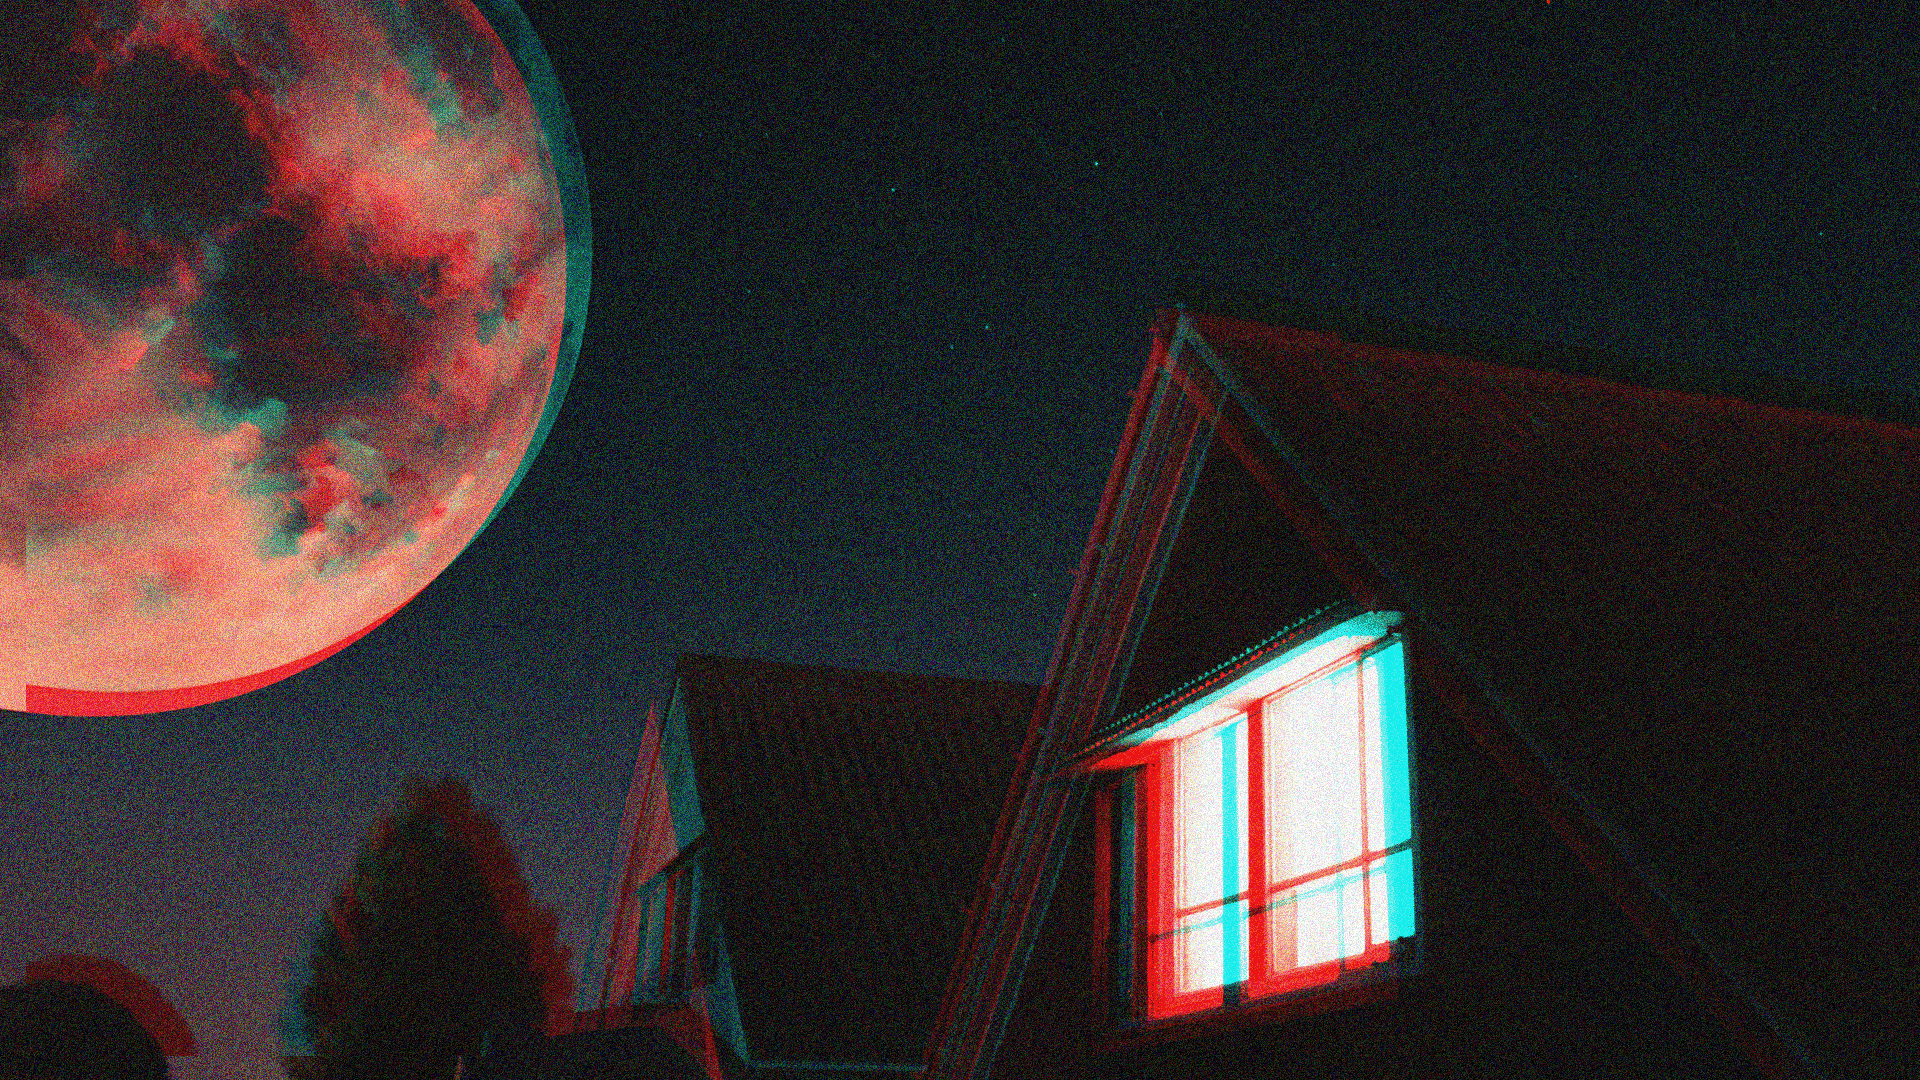 A moon above a house